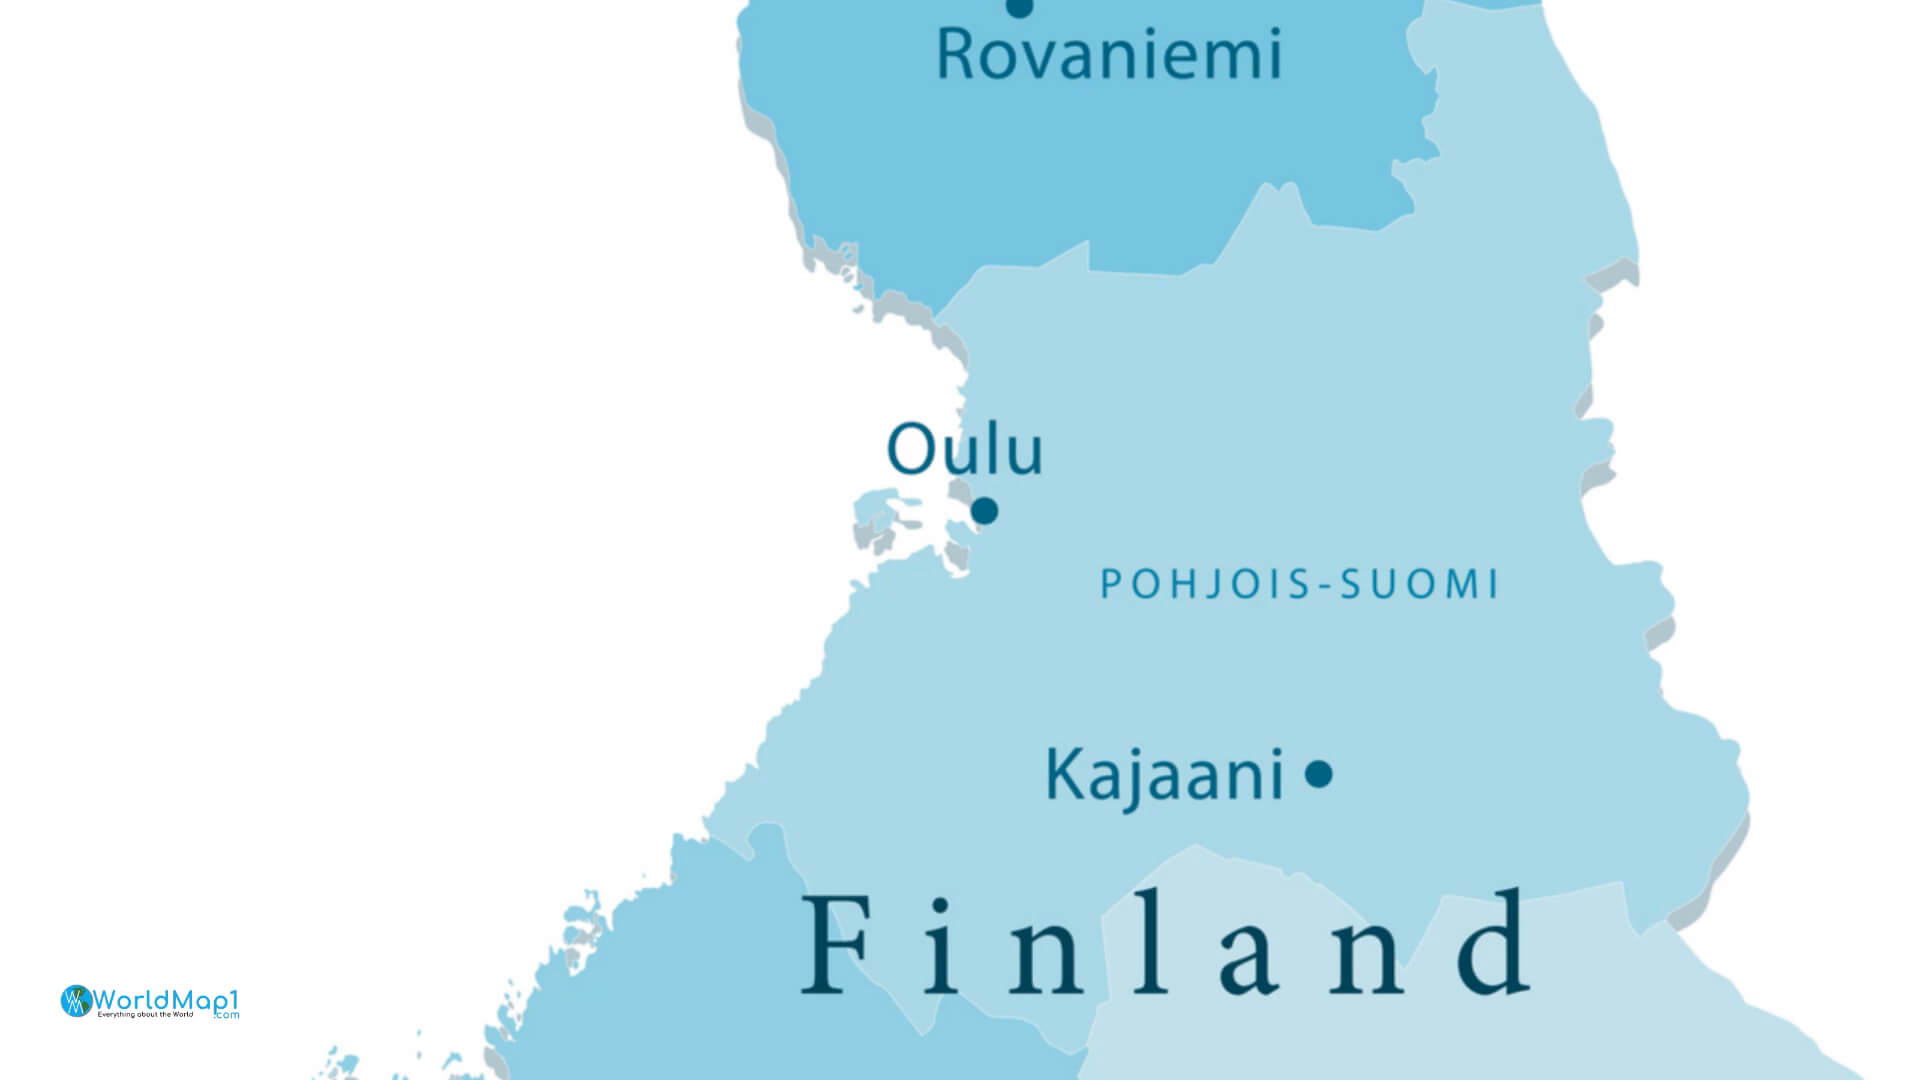 Carte des villes de Finlande avec Rovaniemi Oulu et Kajaani